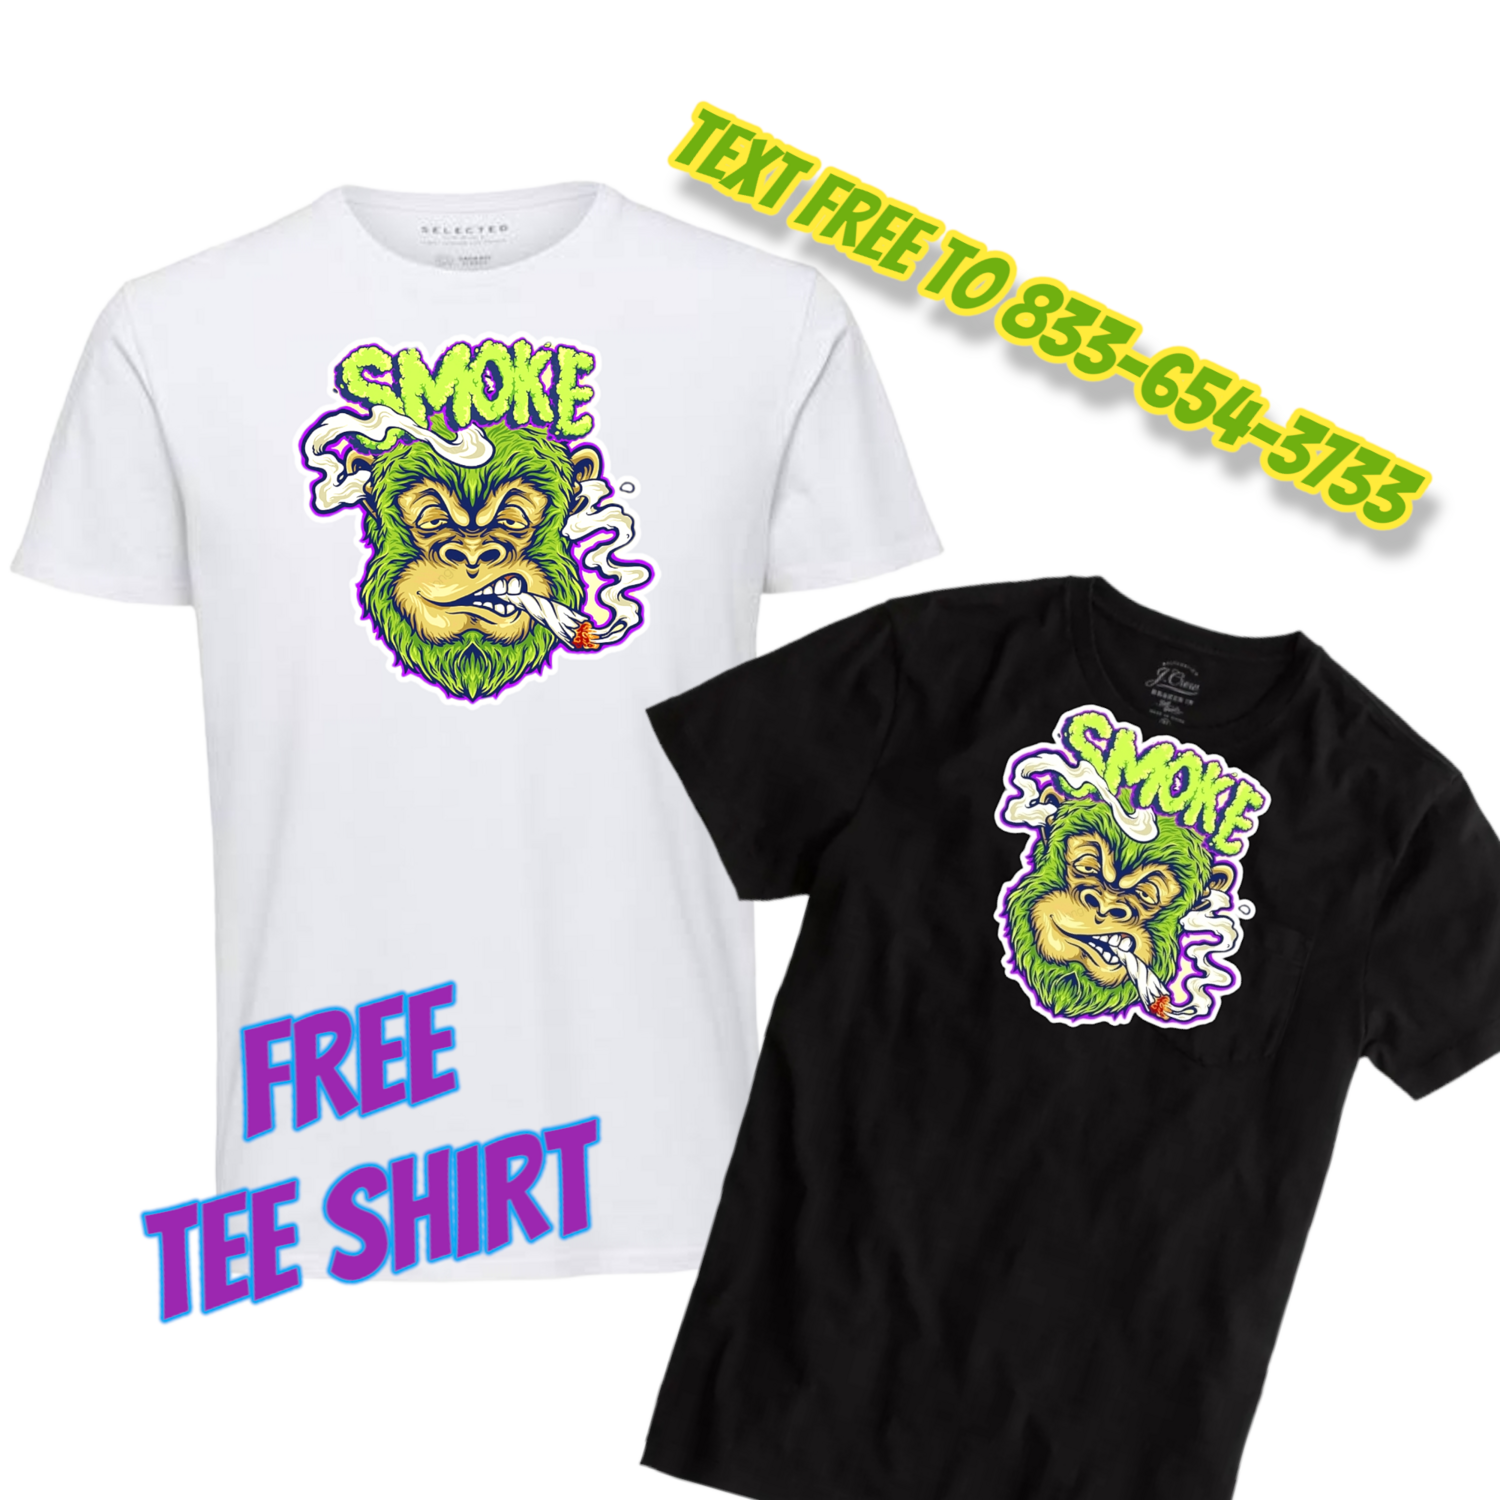 Free tee shirt monkey